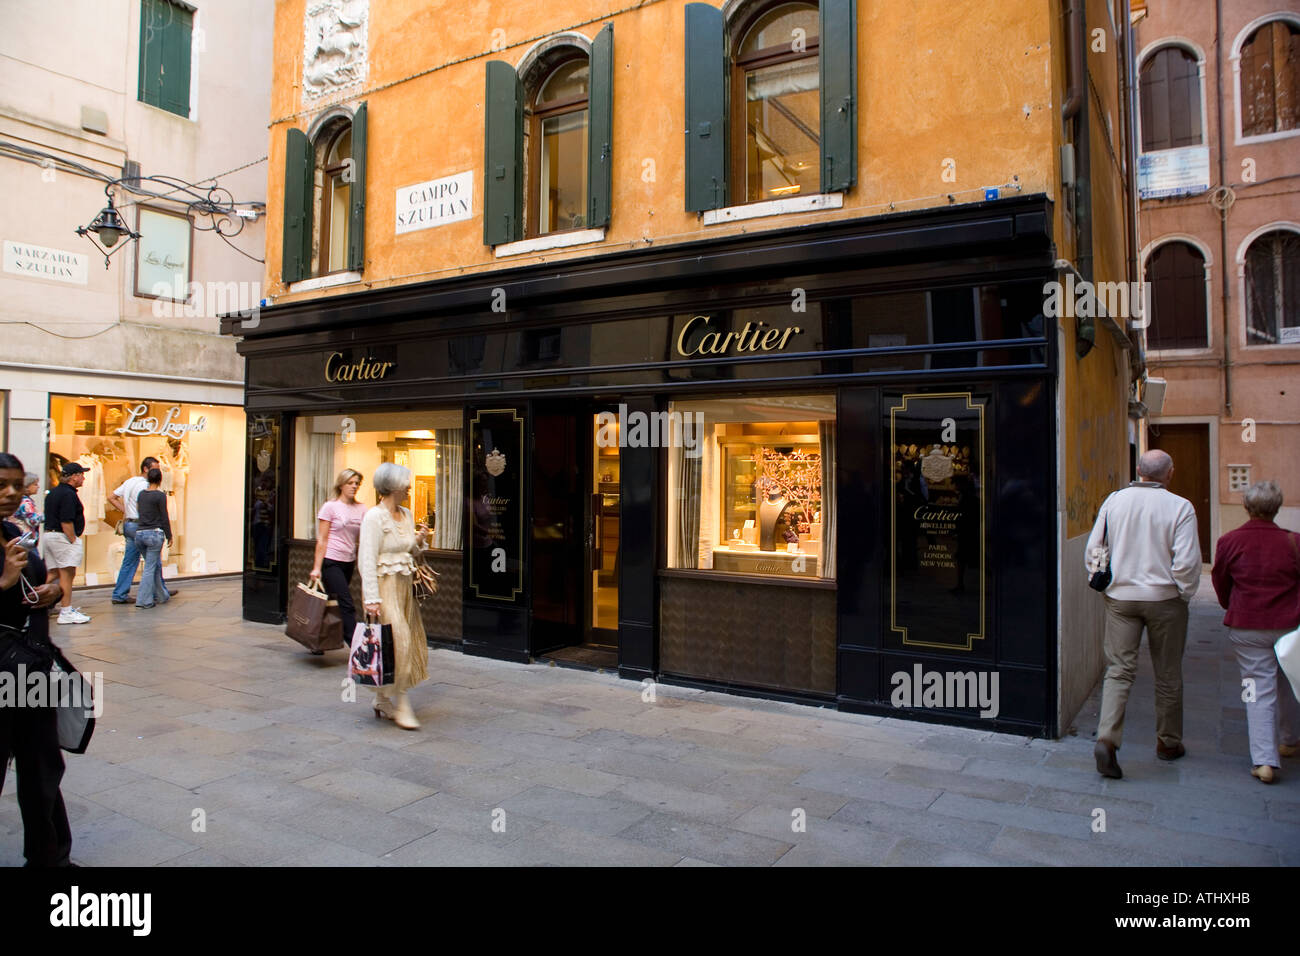 Cartier shop in Venice Italy Stock 